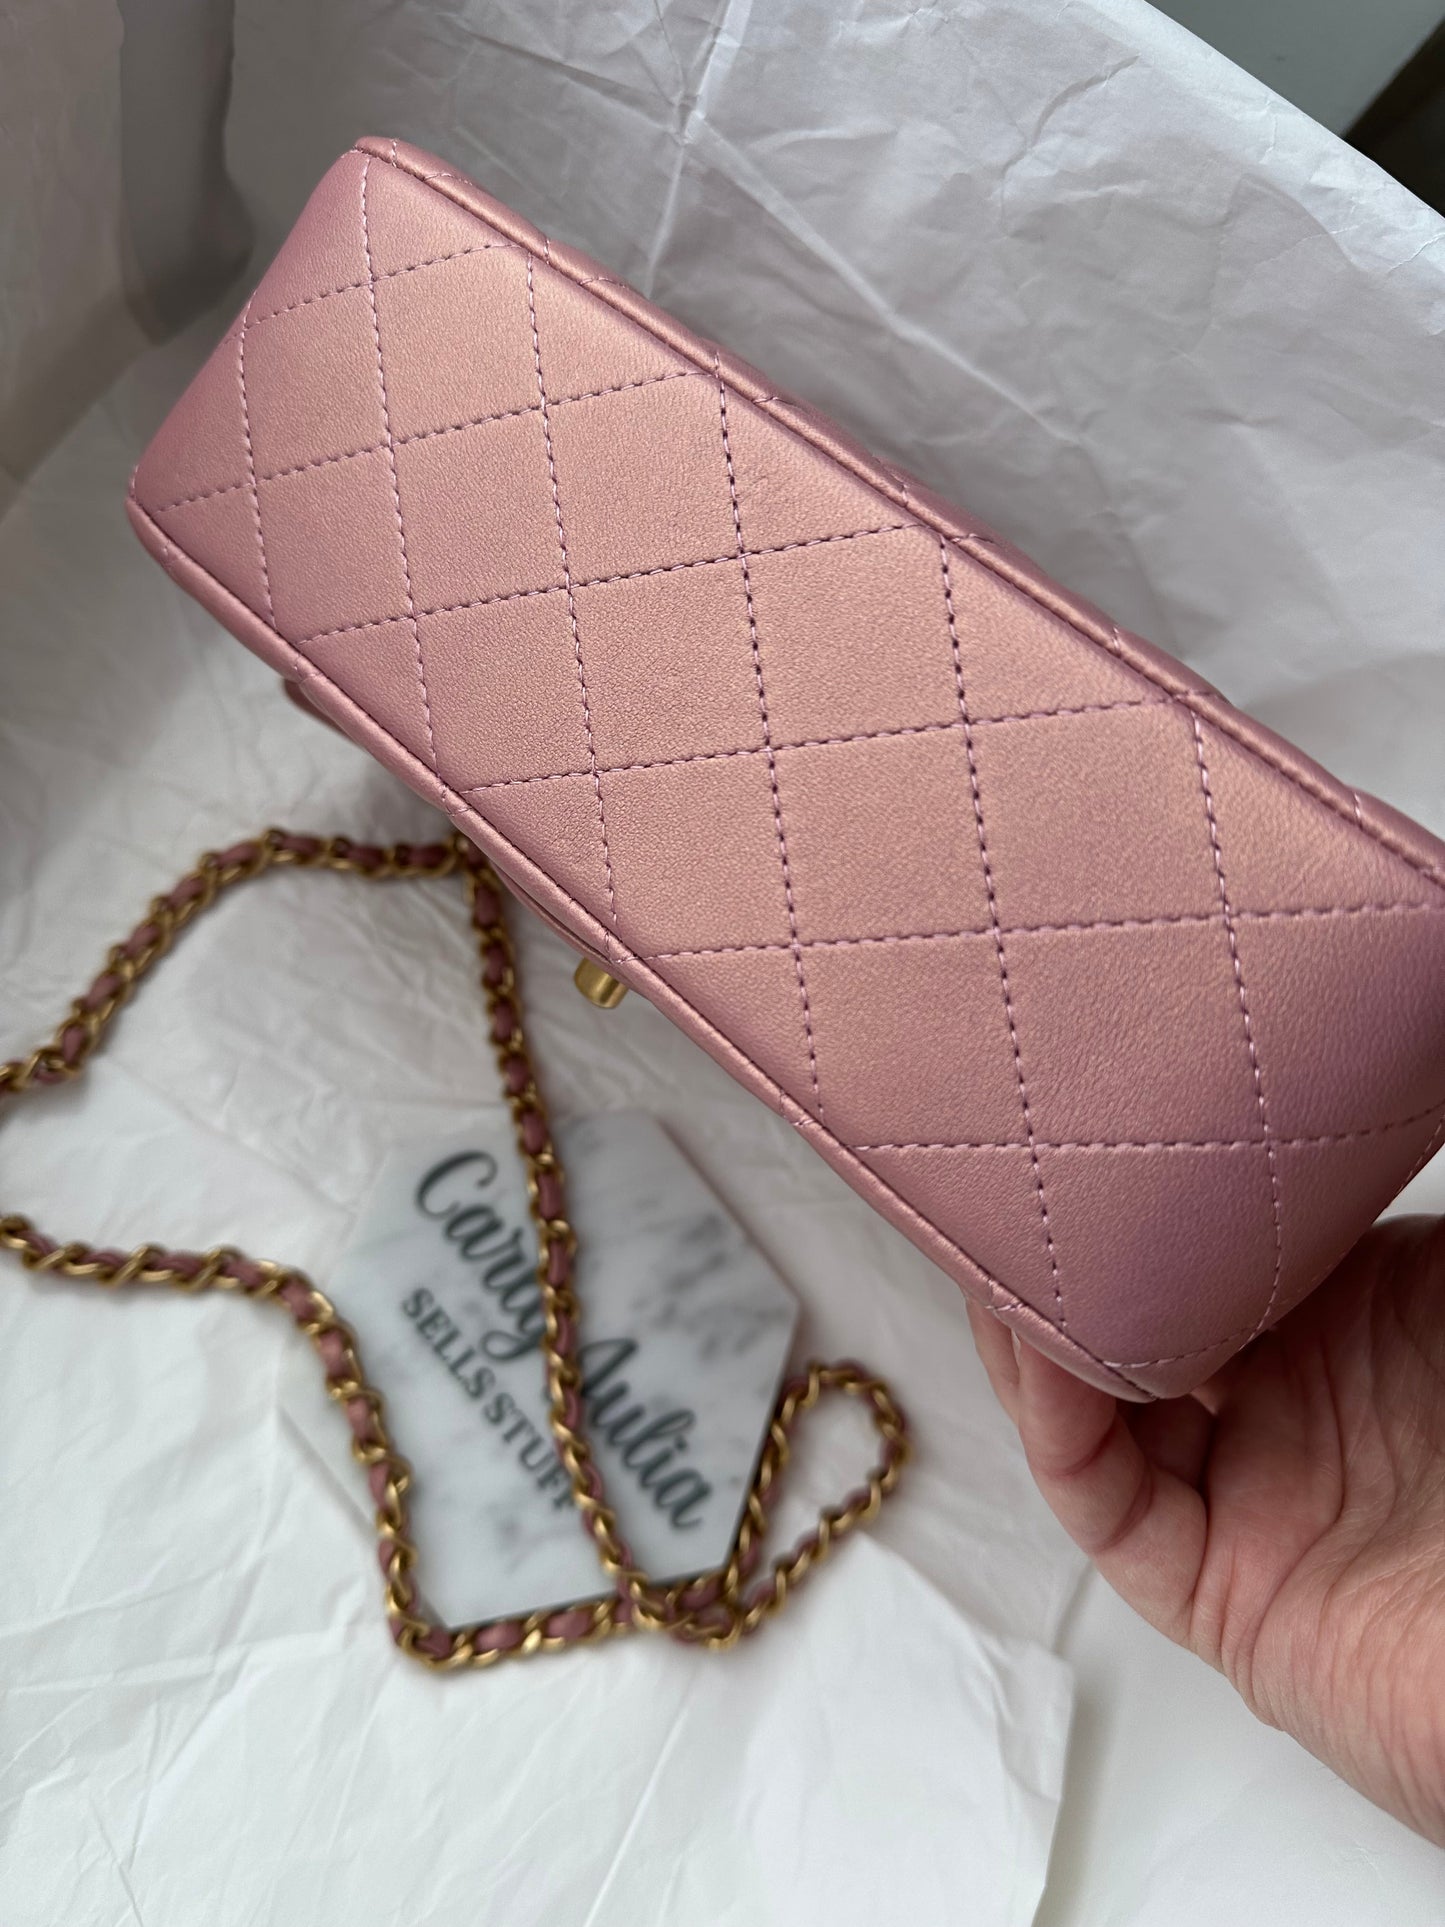 CHANEL 21S Iridescent Mauve Pink Mini Top Handle - Carly Julia Sells Stuff, LLC